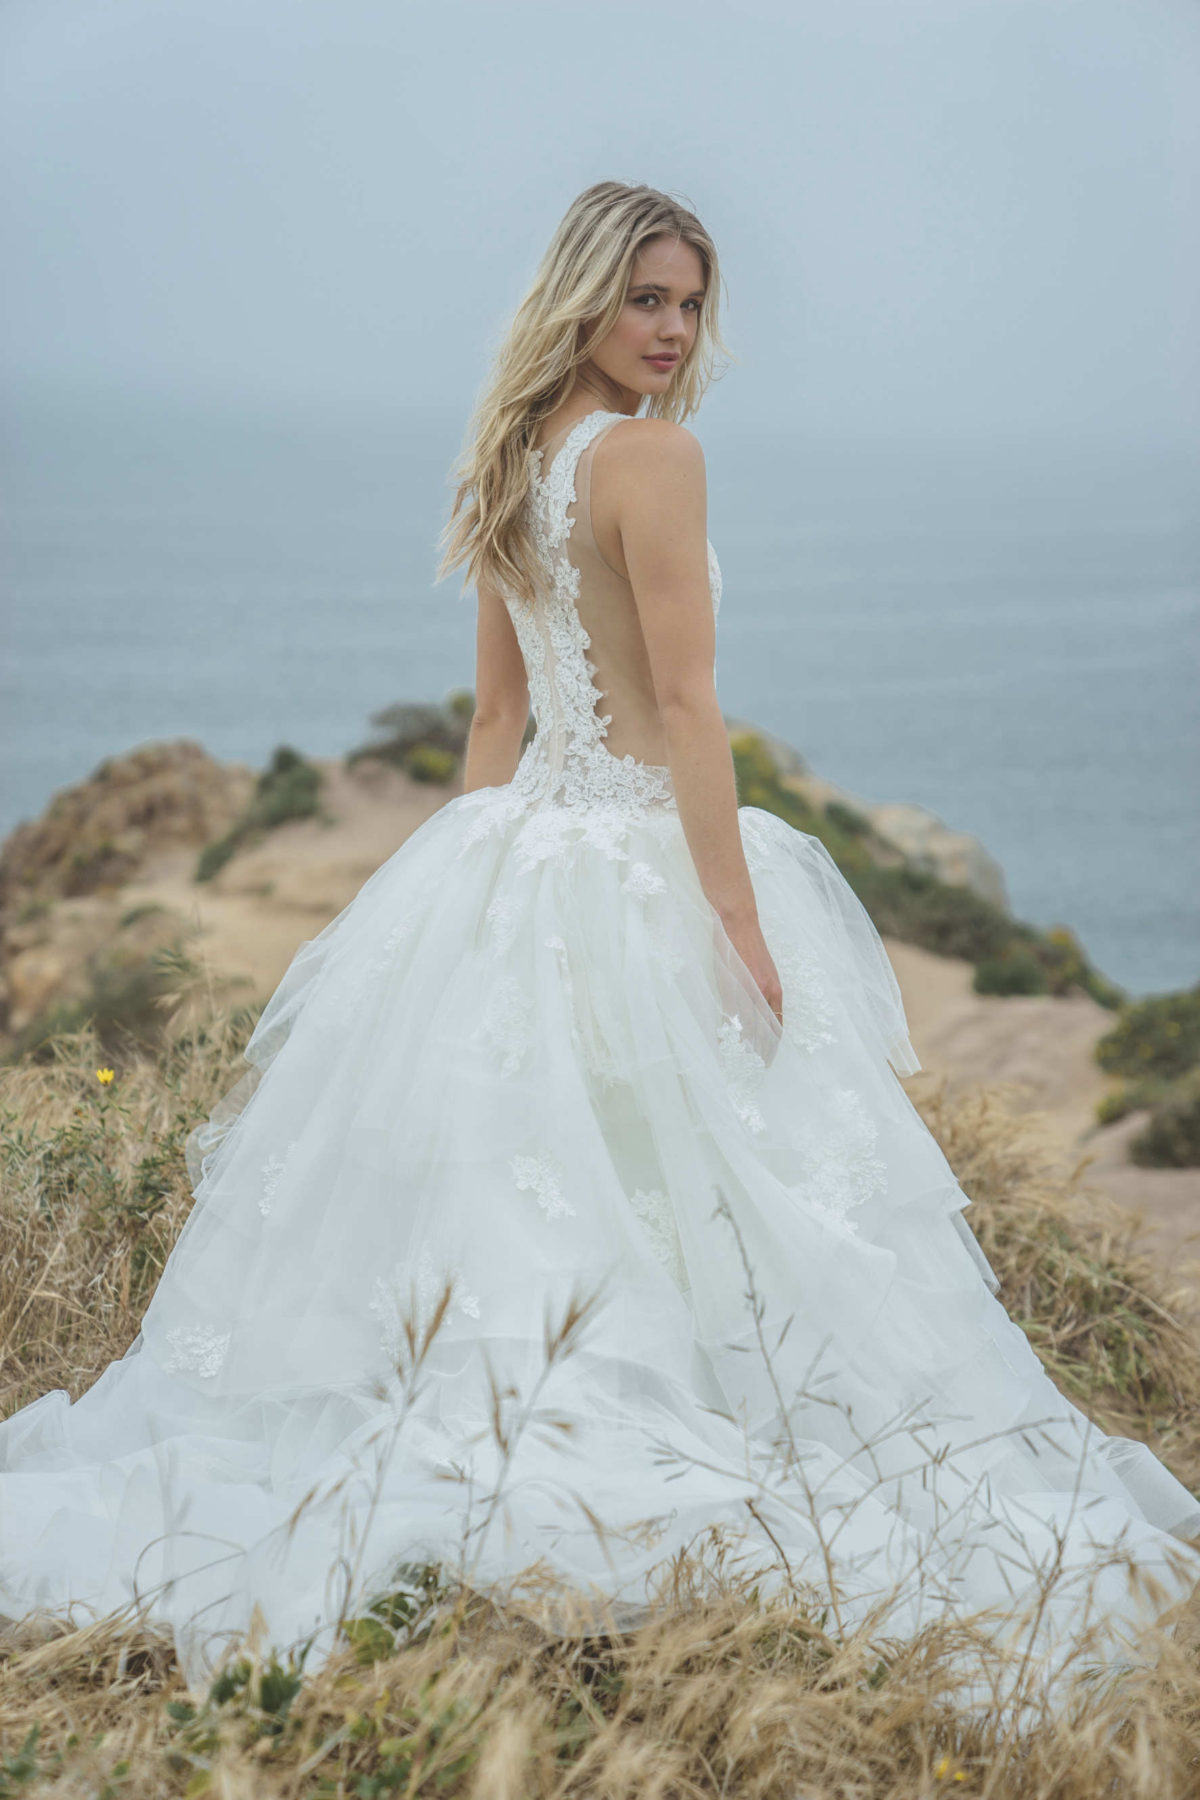 Nyc 2018 Bridal Fashion Week Top 10 Wedding Gown Trends Rothweiler Event Design Blog 6091